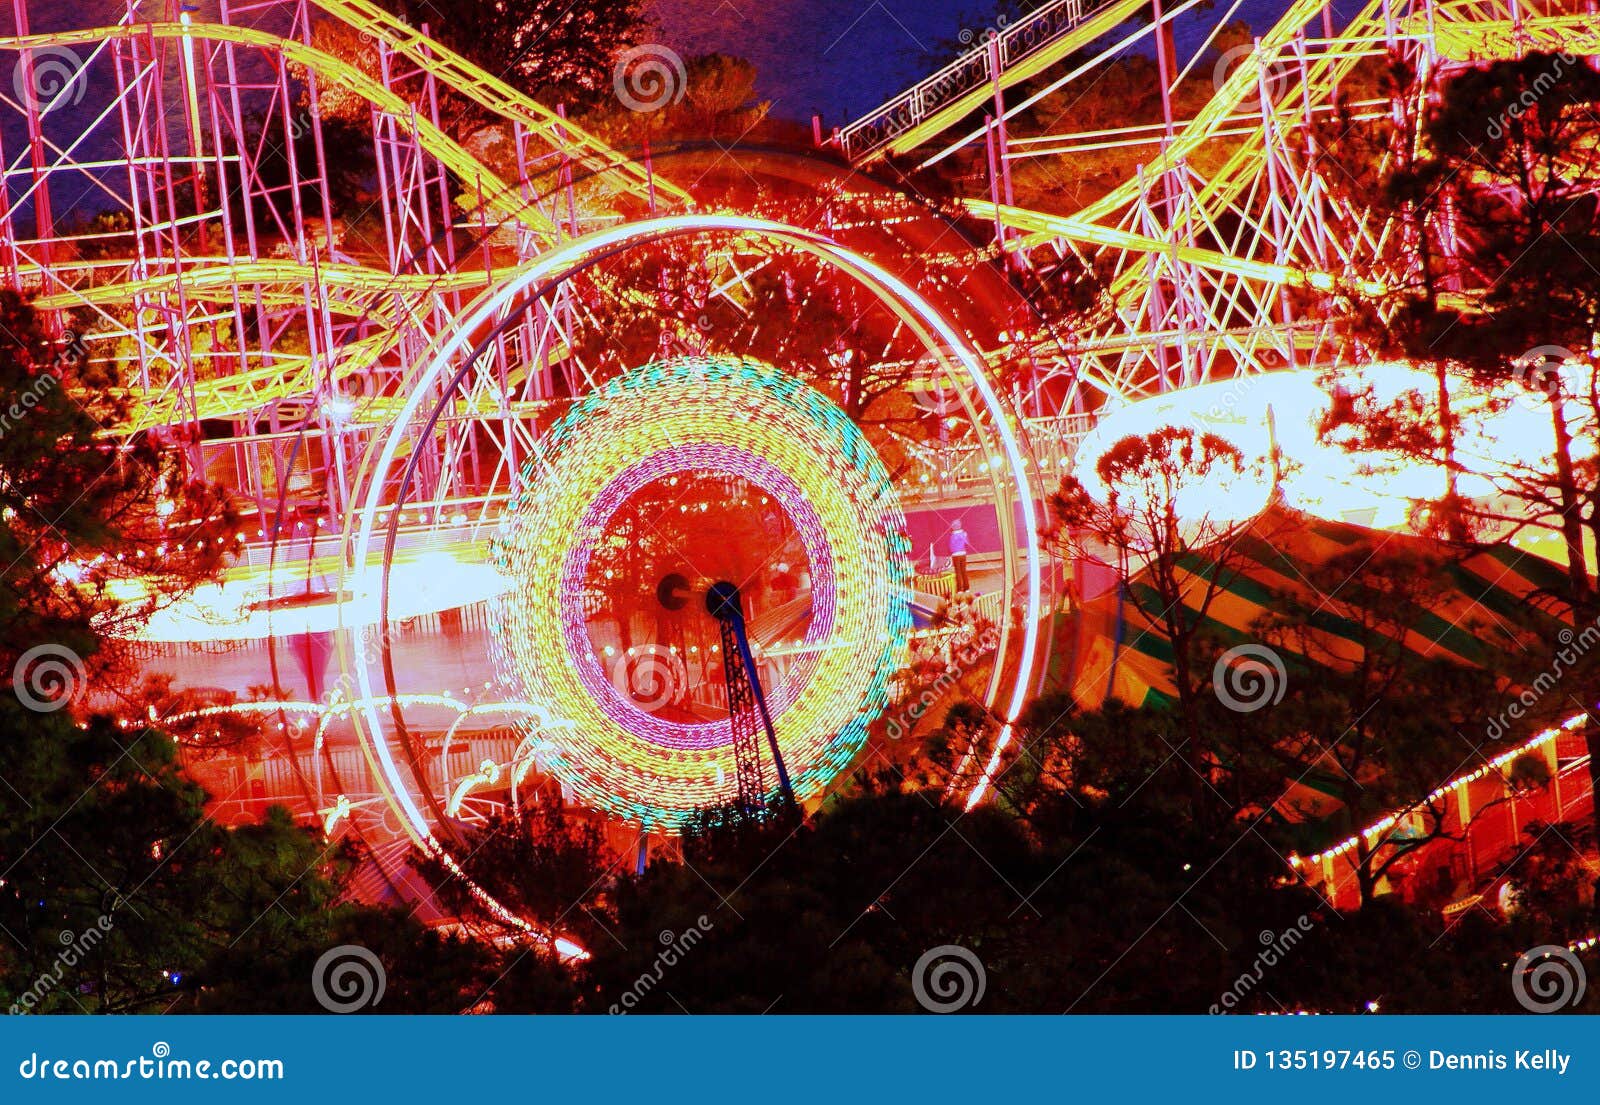 Panama City Beach Florida Ferris Wheel Time Lapse Stock Image